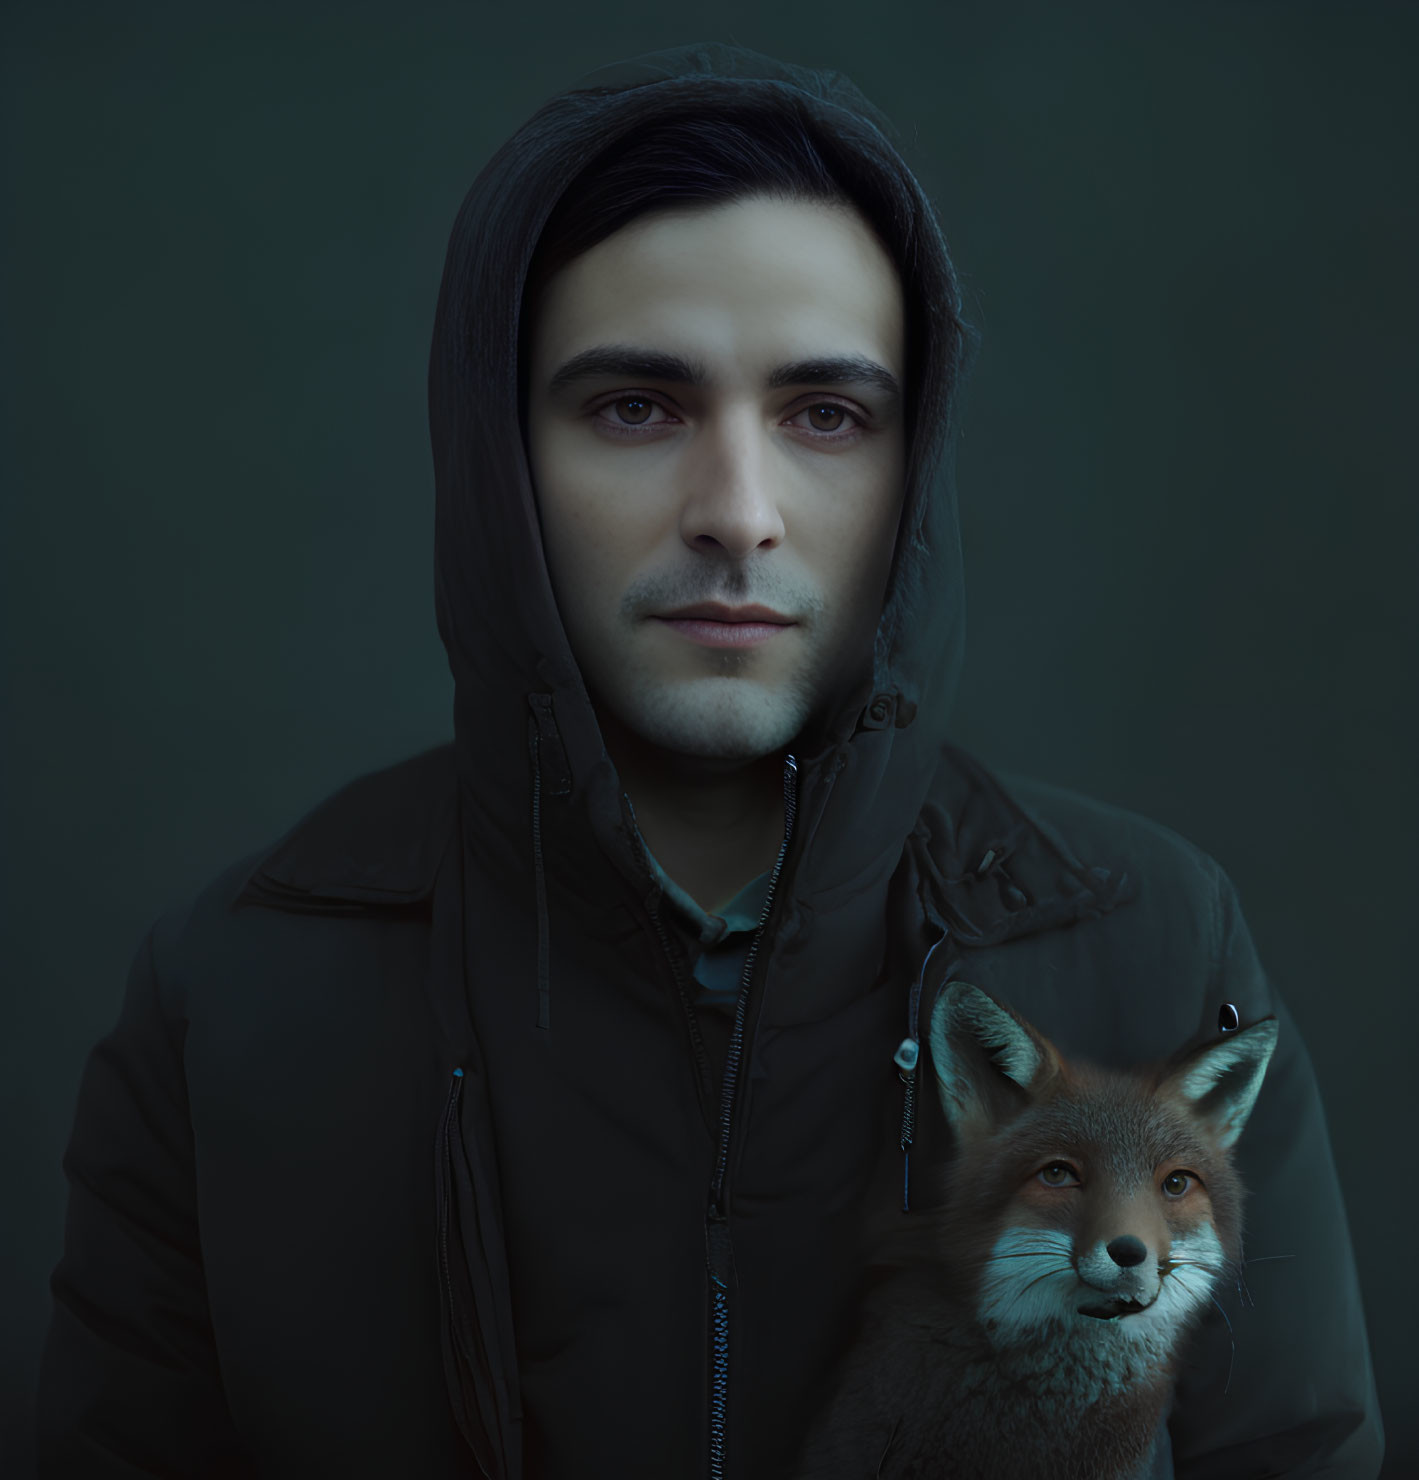 Dark-haired man in hooded jacket with fox against dark background